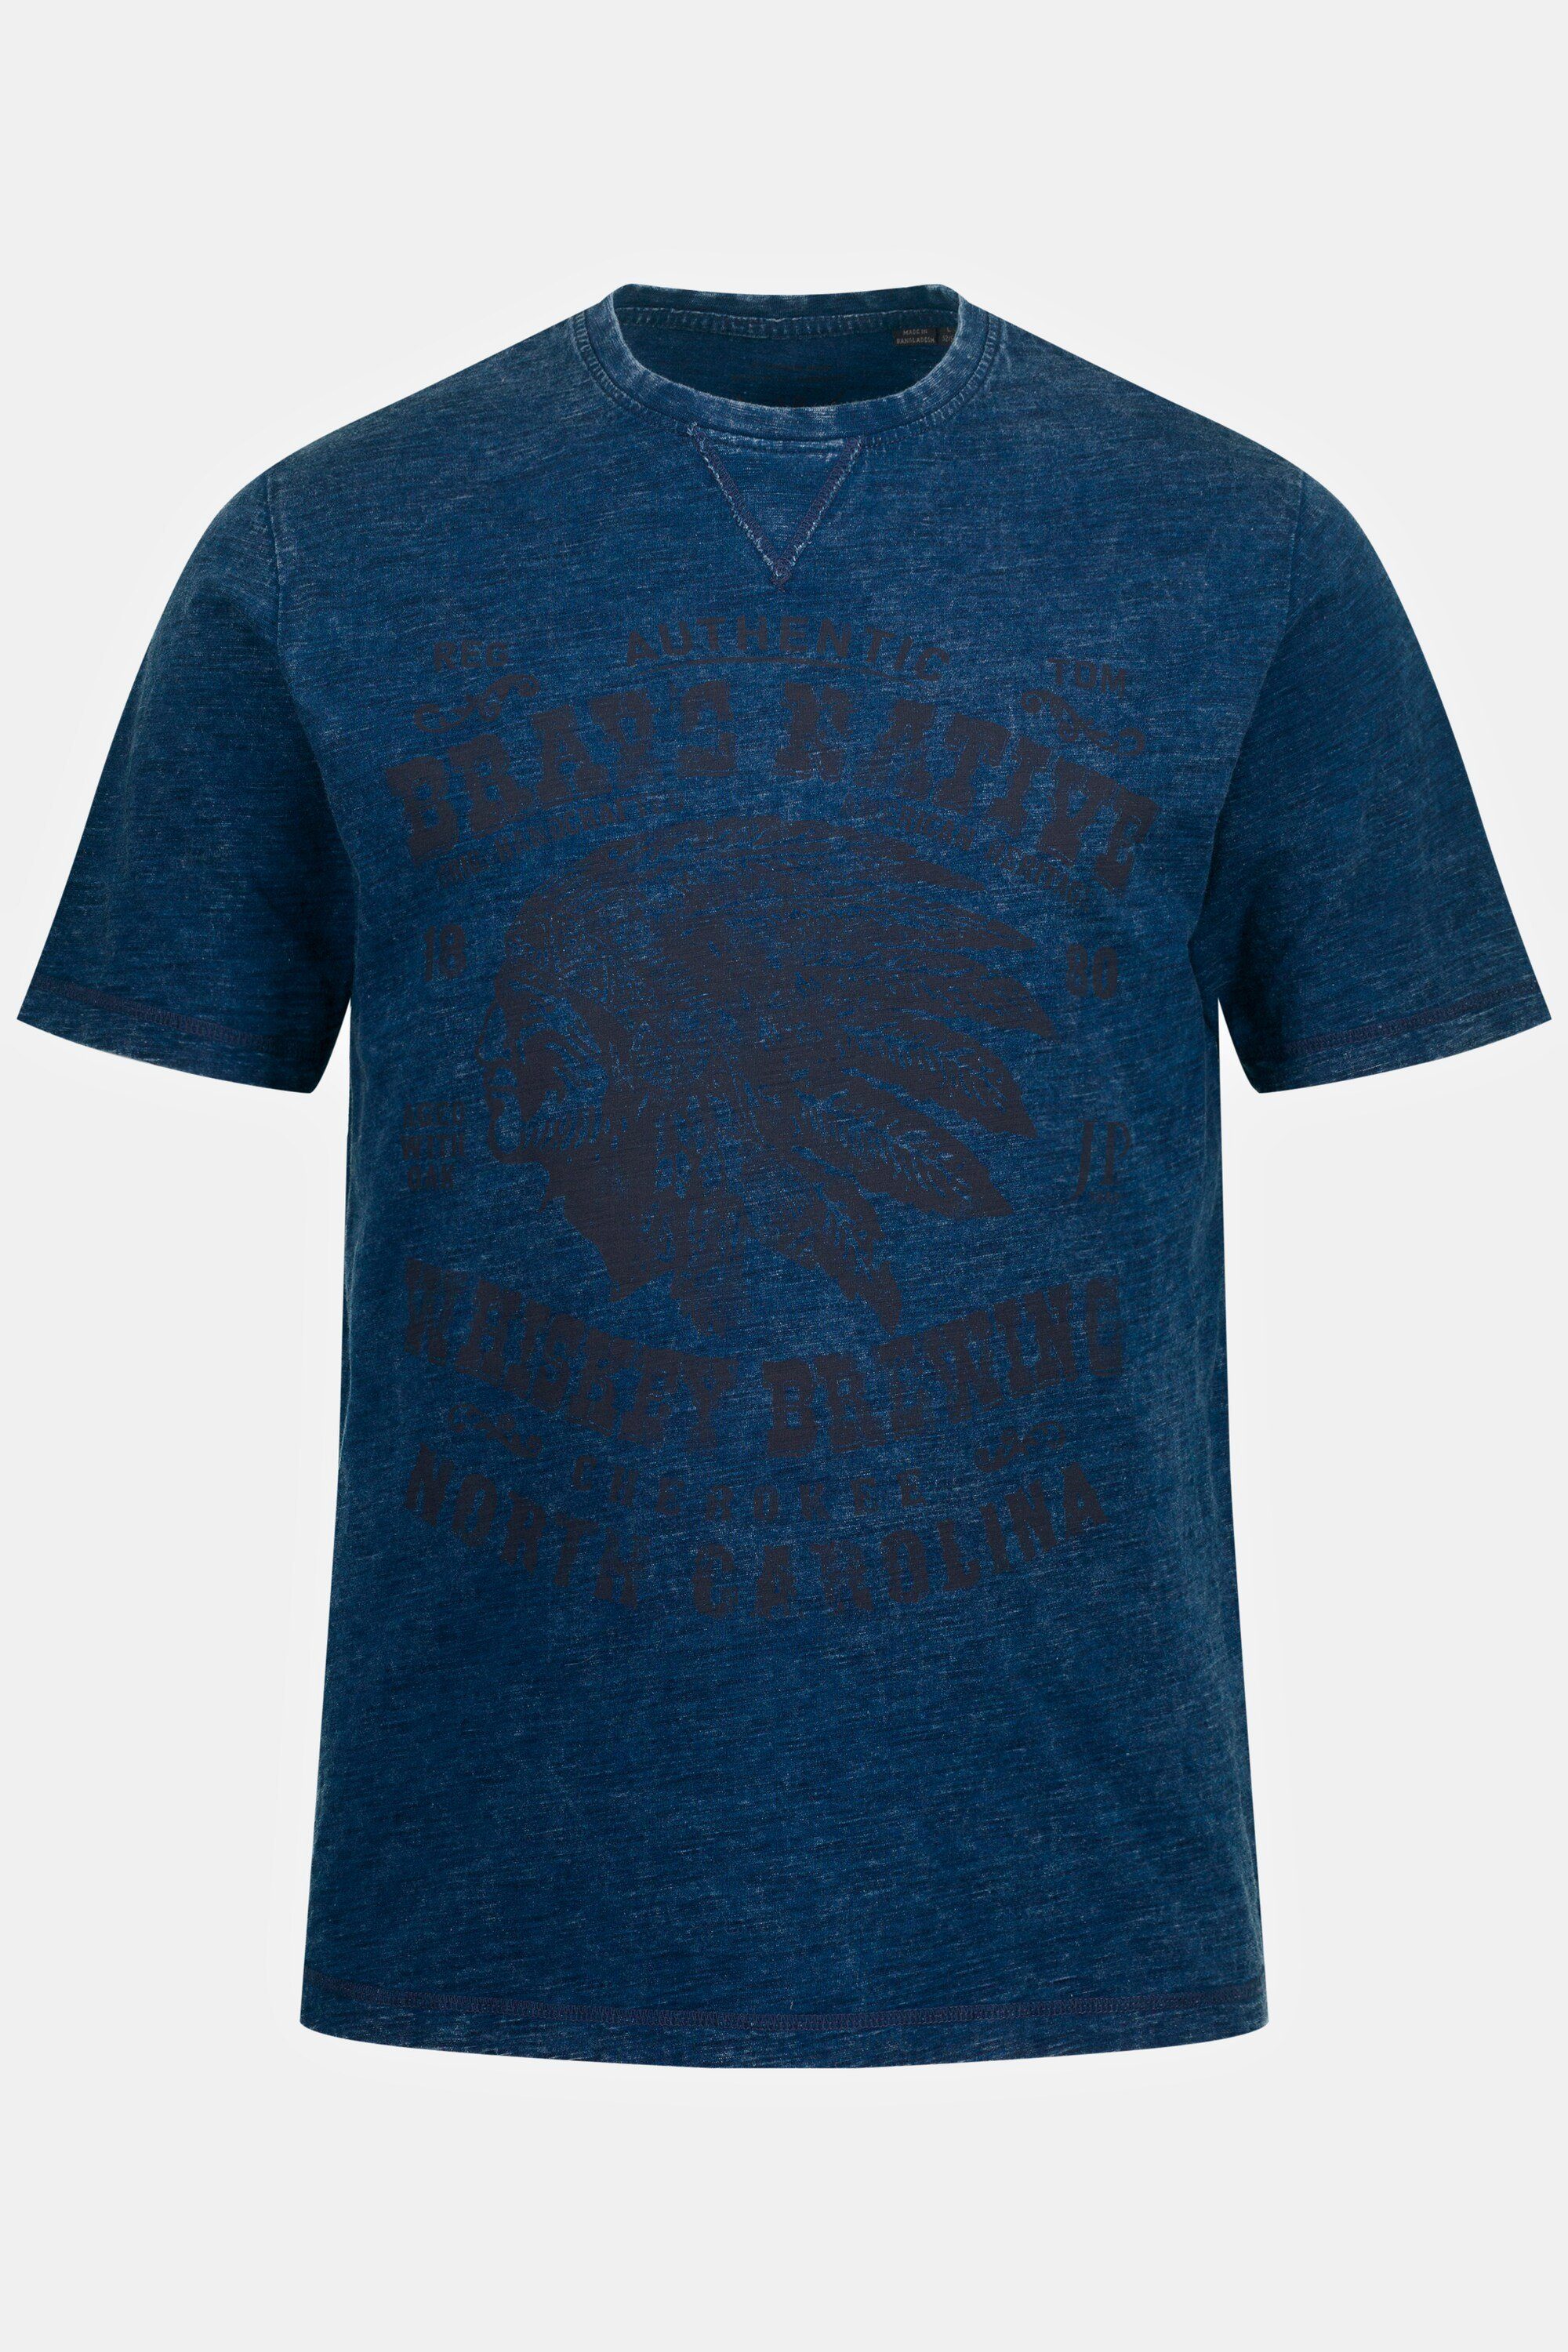 Halbarm T-Shirt Print JP1880 T-Shirt Indigo-Färbung Rundhals